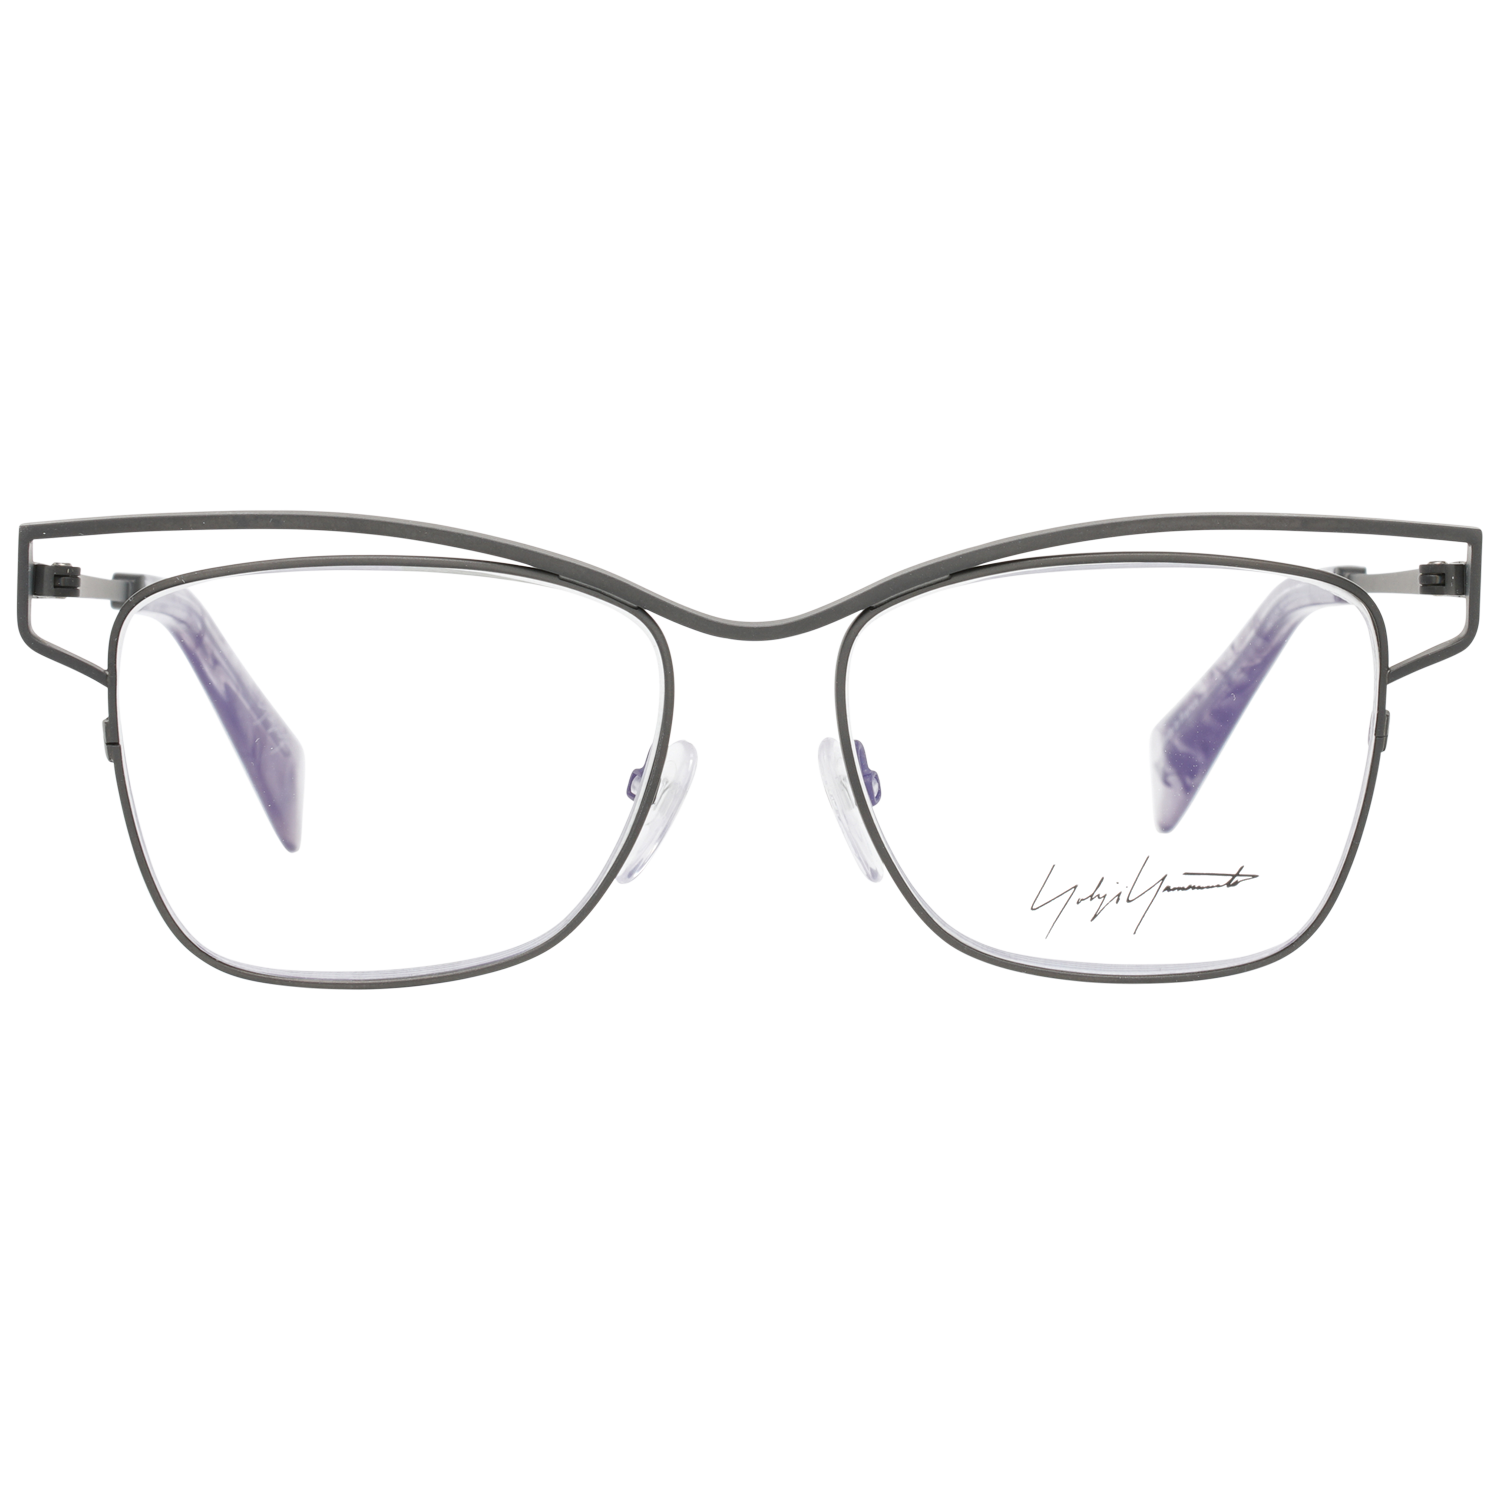 Yohji Yamamoto Frames Yohji Yamamoto Optical Frame YY3019 902 51 Eyeglasses Eyewear UK USA Australia 